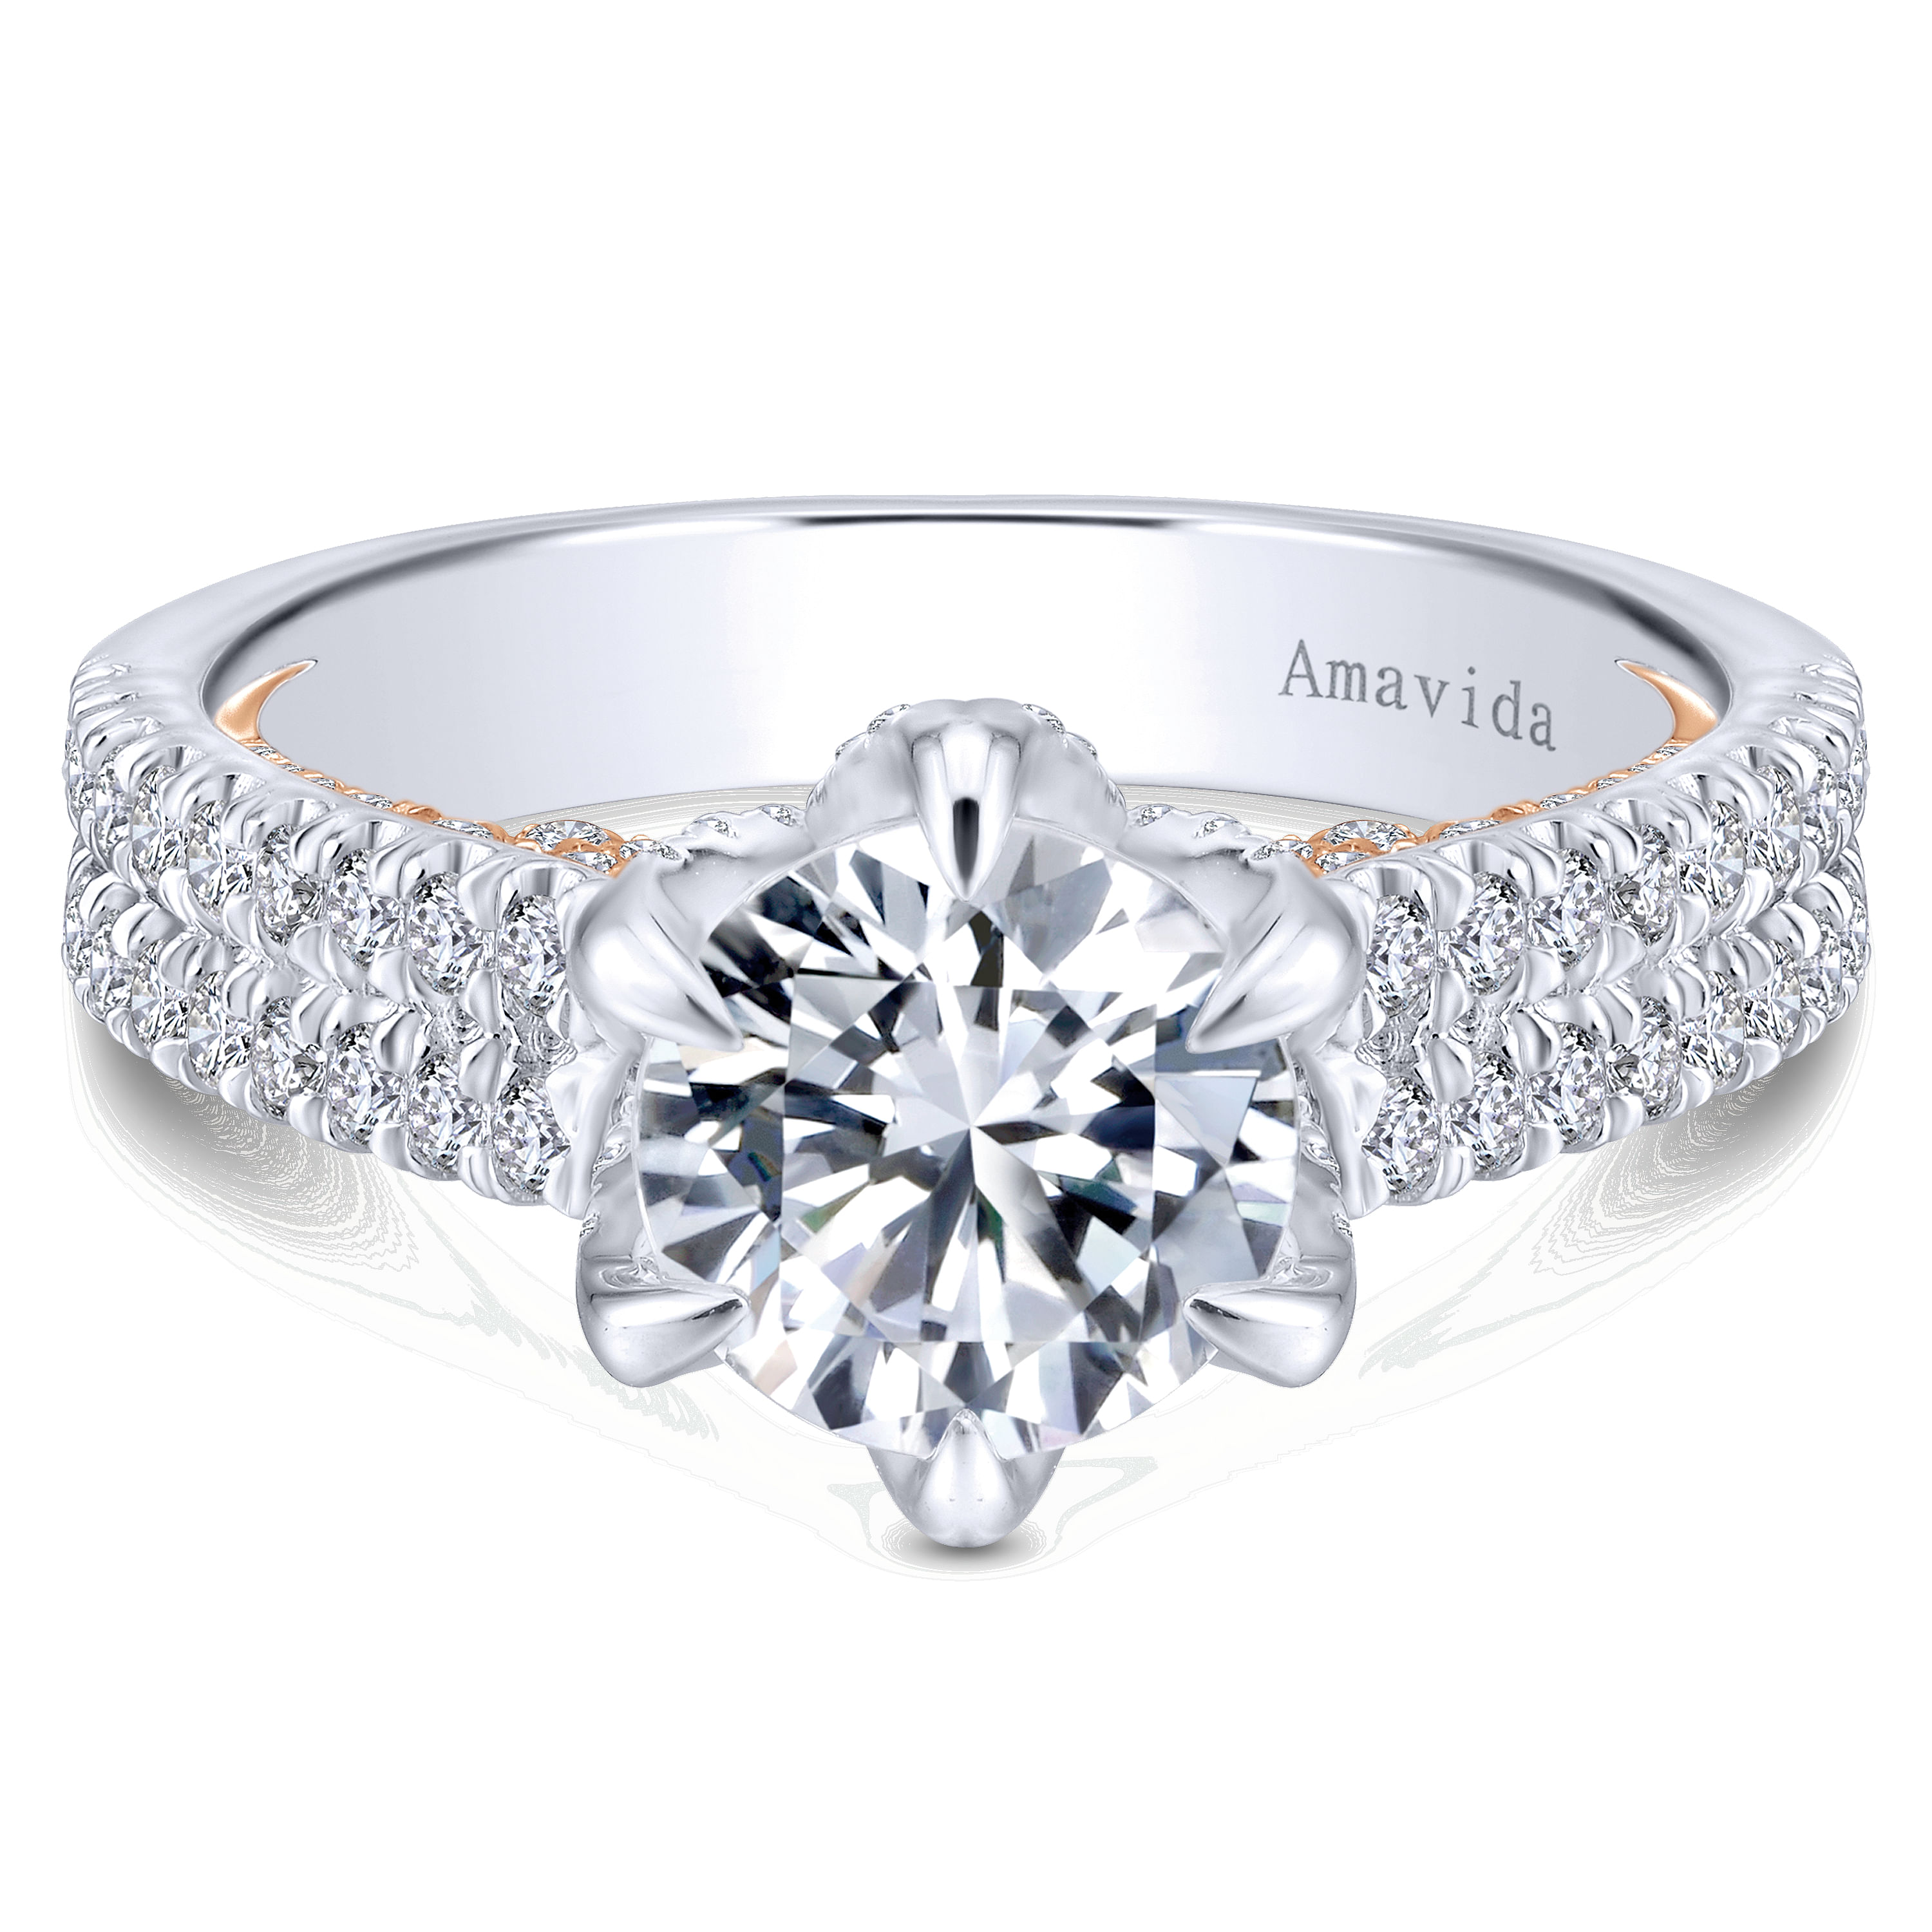 Gabriel - 18K White Gold Round Diamond Engagement Ring